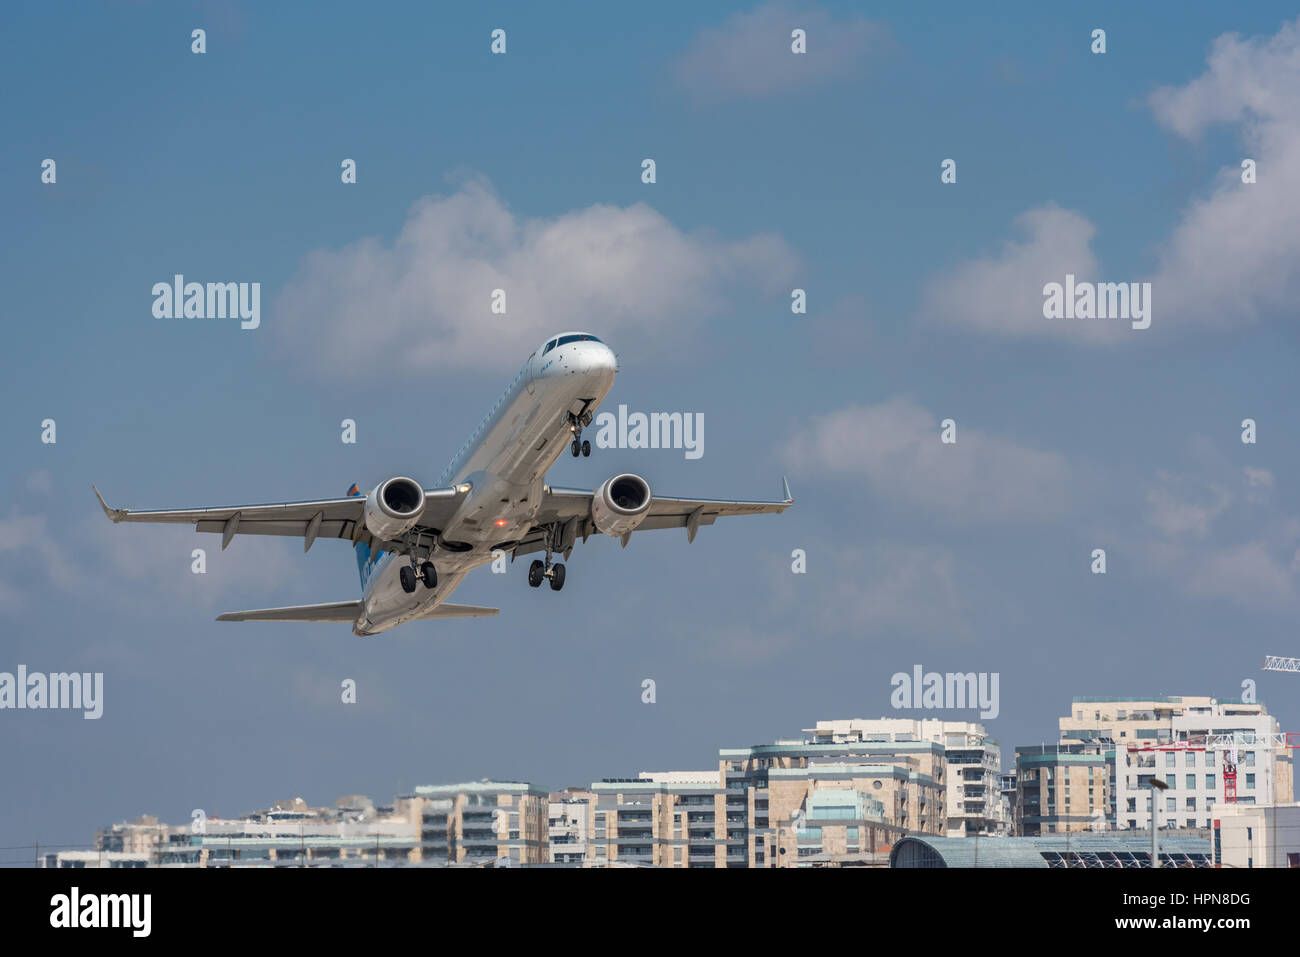 Israel, Tel Aviv-Yafo, Sde Dov airport - plane taking of Stock Photo